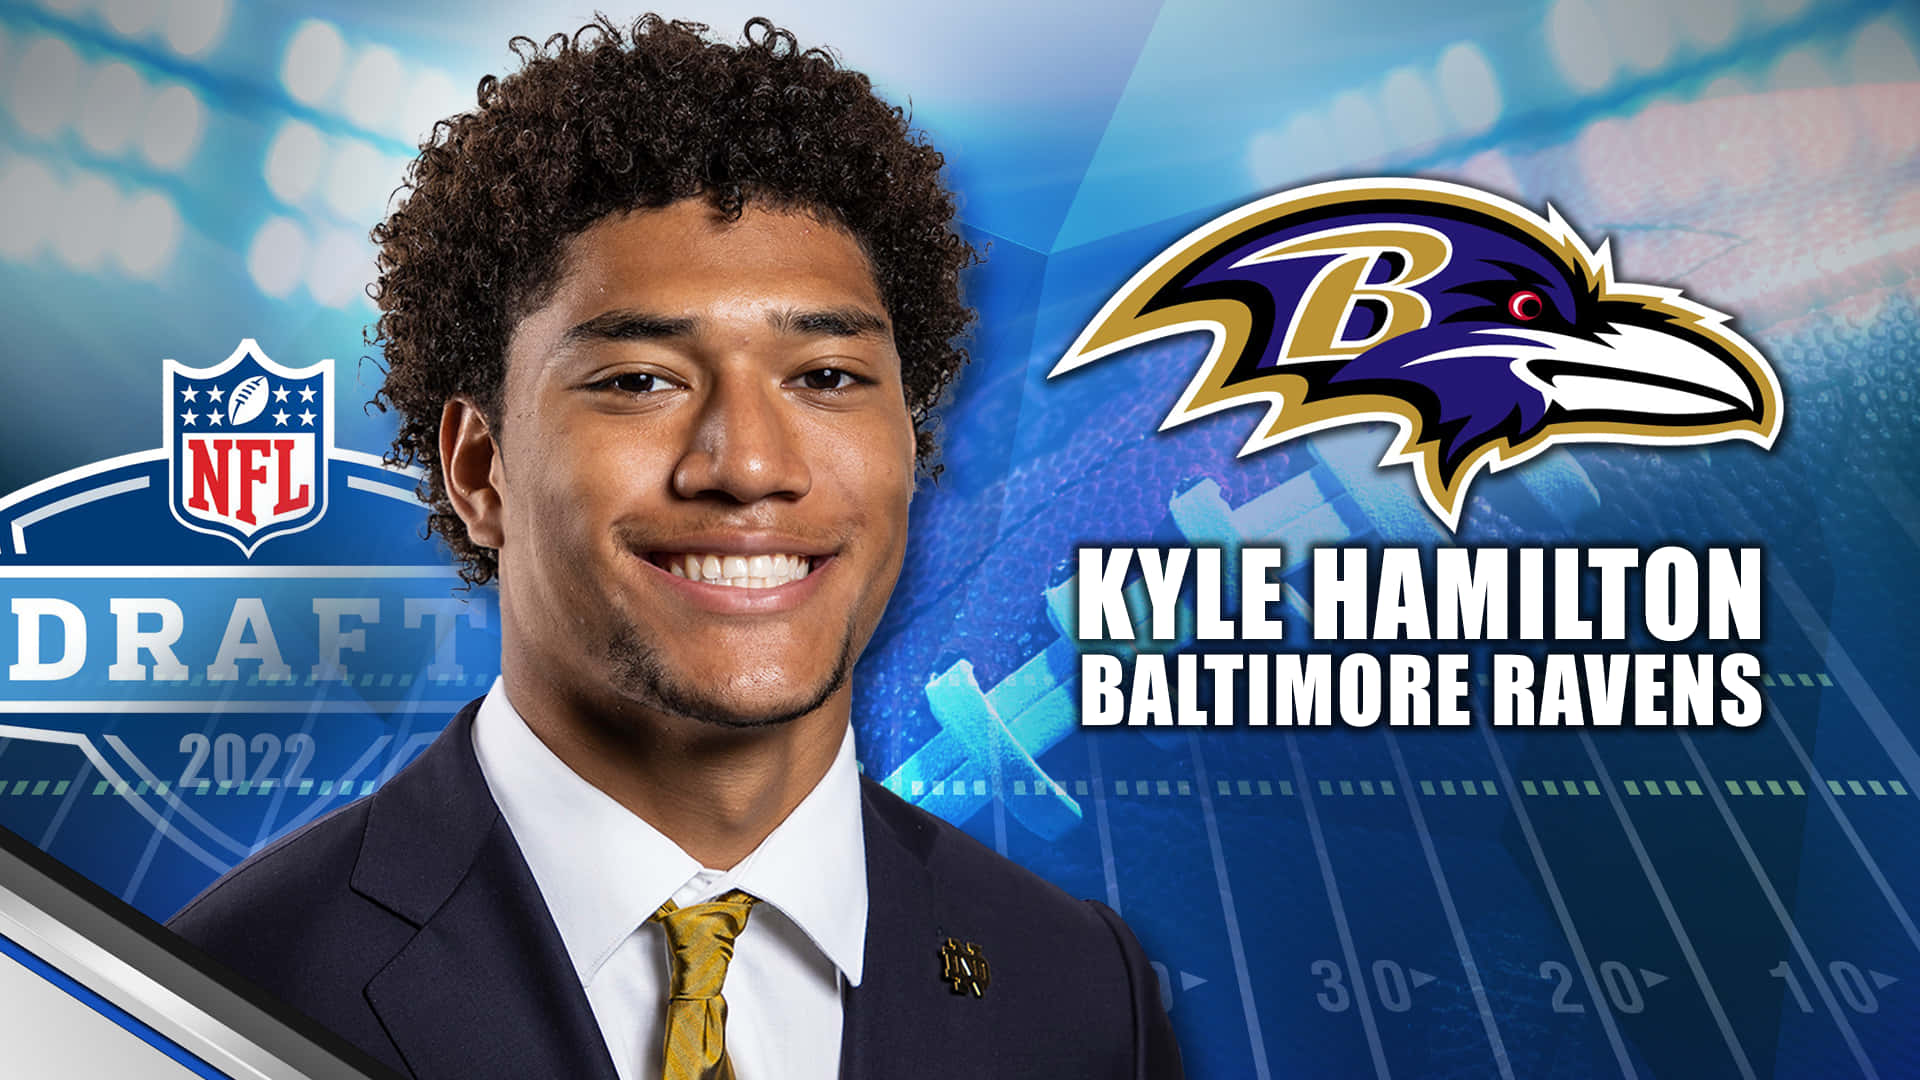 Kyle Hamilton N F L Draft2022 Baltimore Ravens Wallpaper